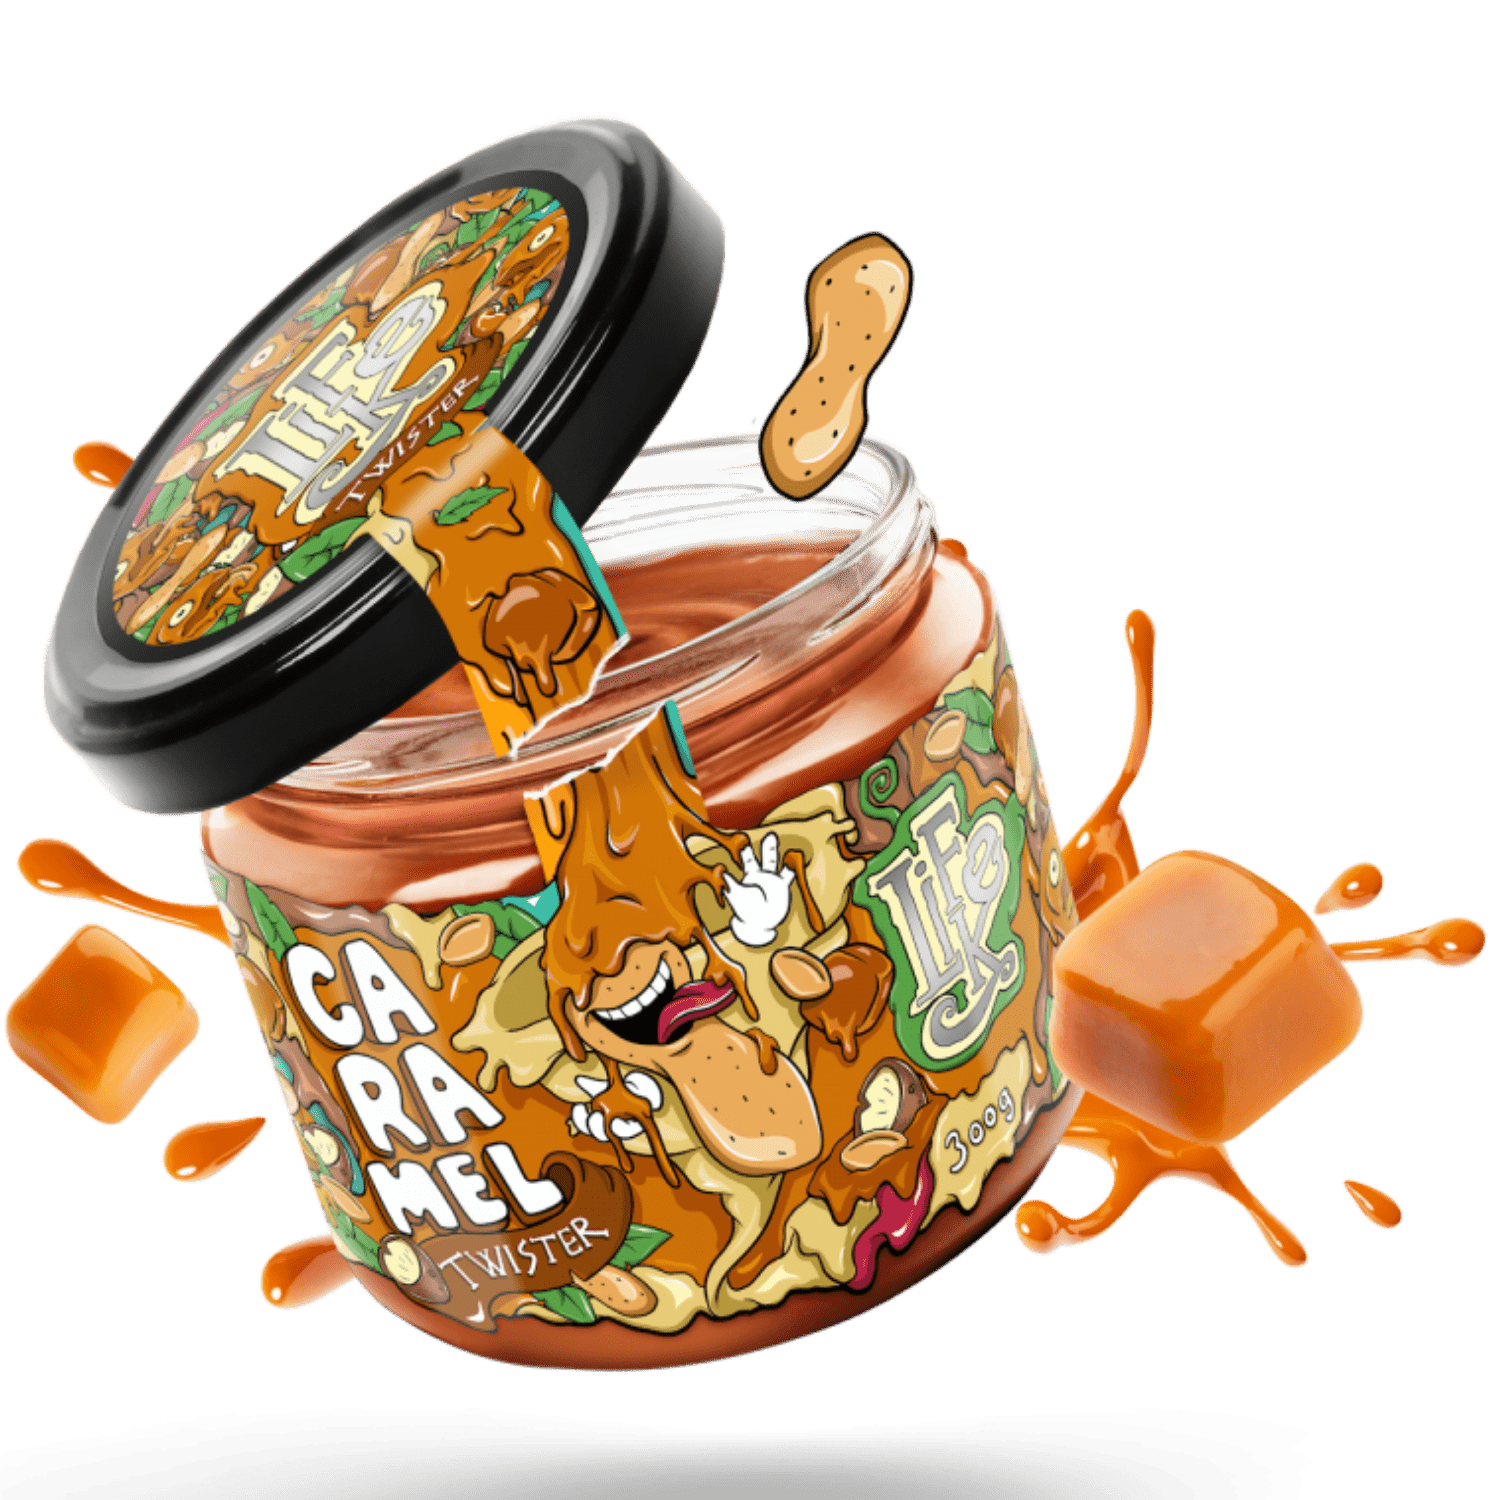 Lifelike - caramel twister (300g)